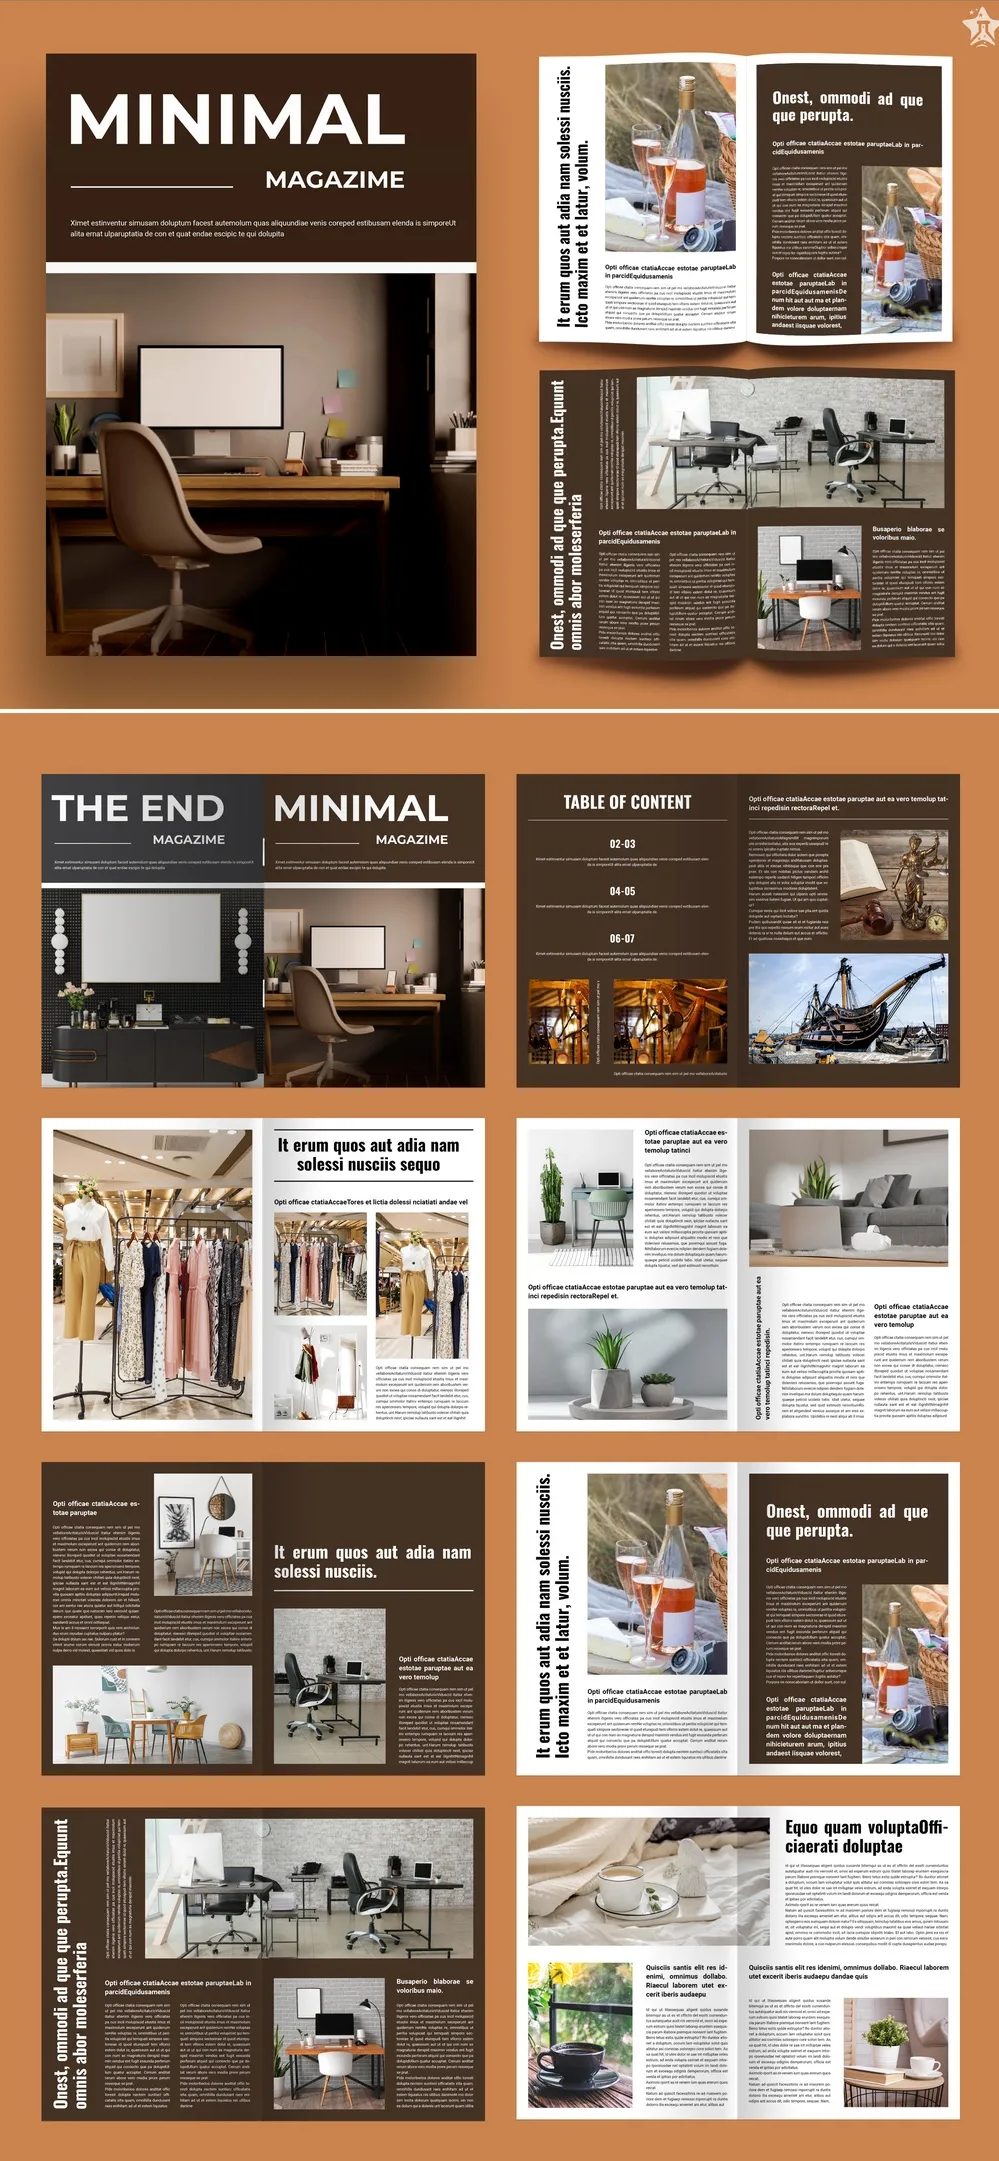 Adobestock - Minimal Magazine 723811160